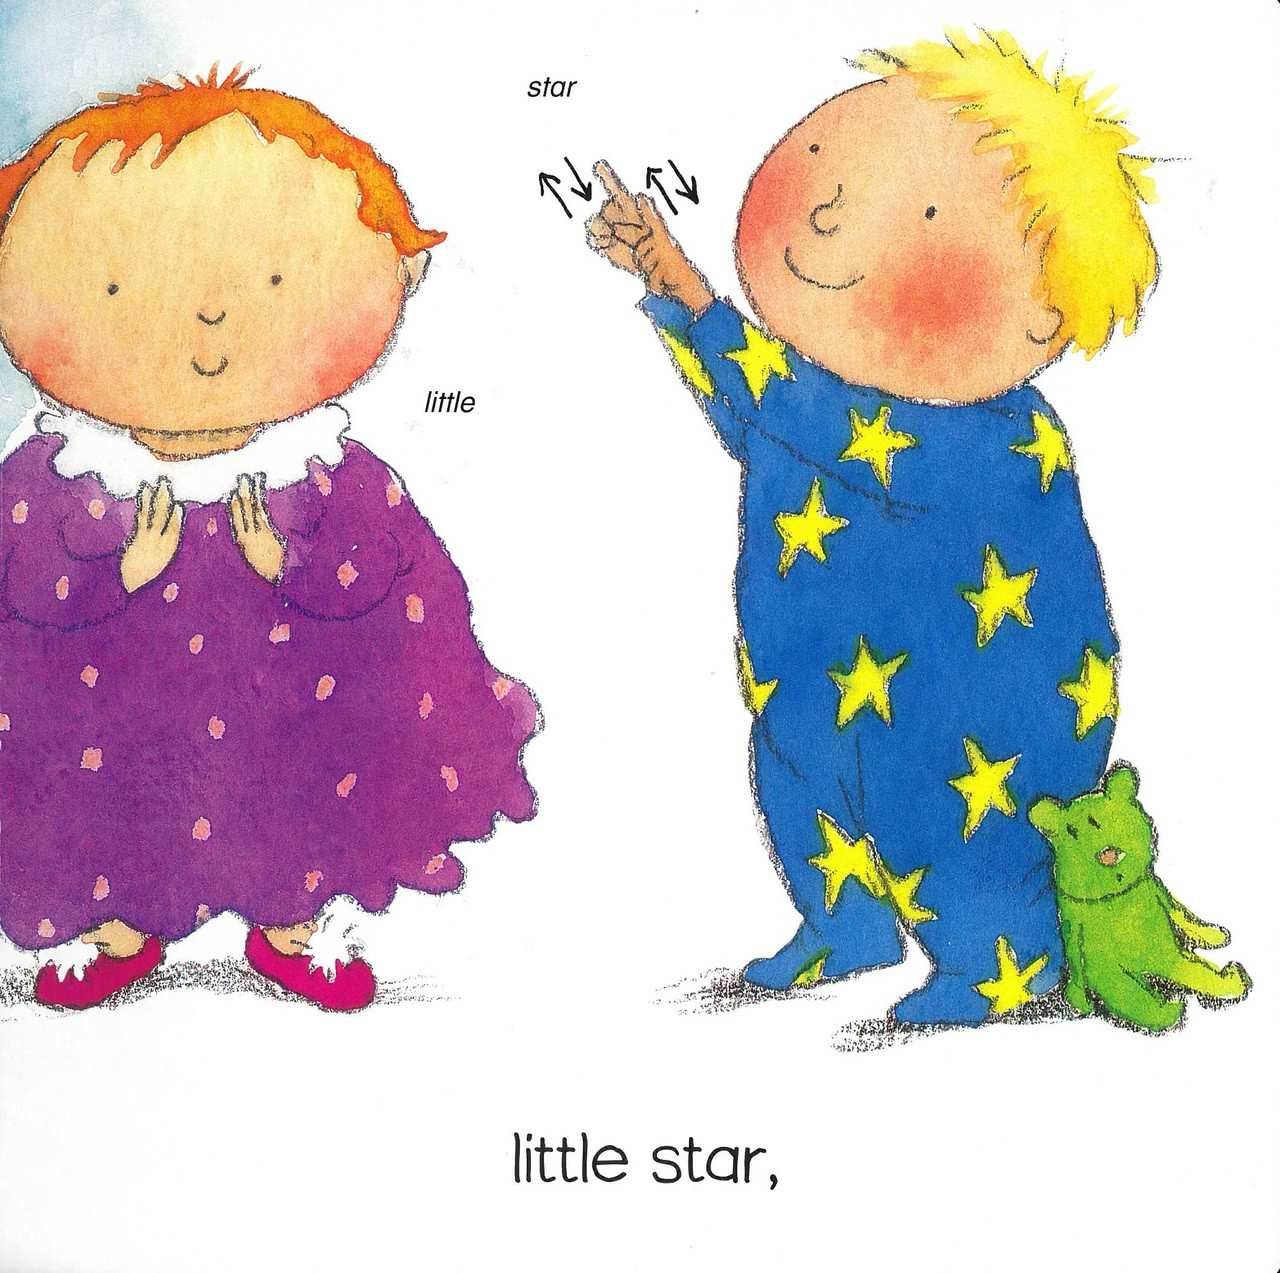 Twinkle Twinkle Little Star and Other Nursery Rhymes - Make Believe Ideas US